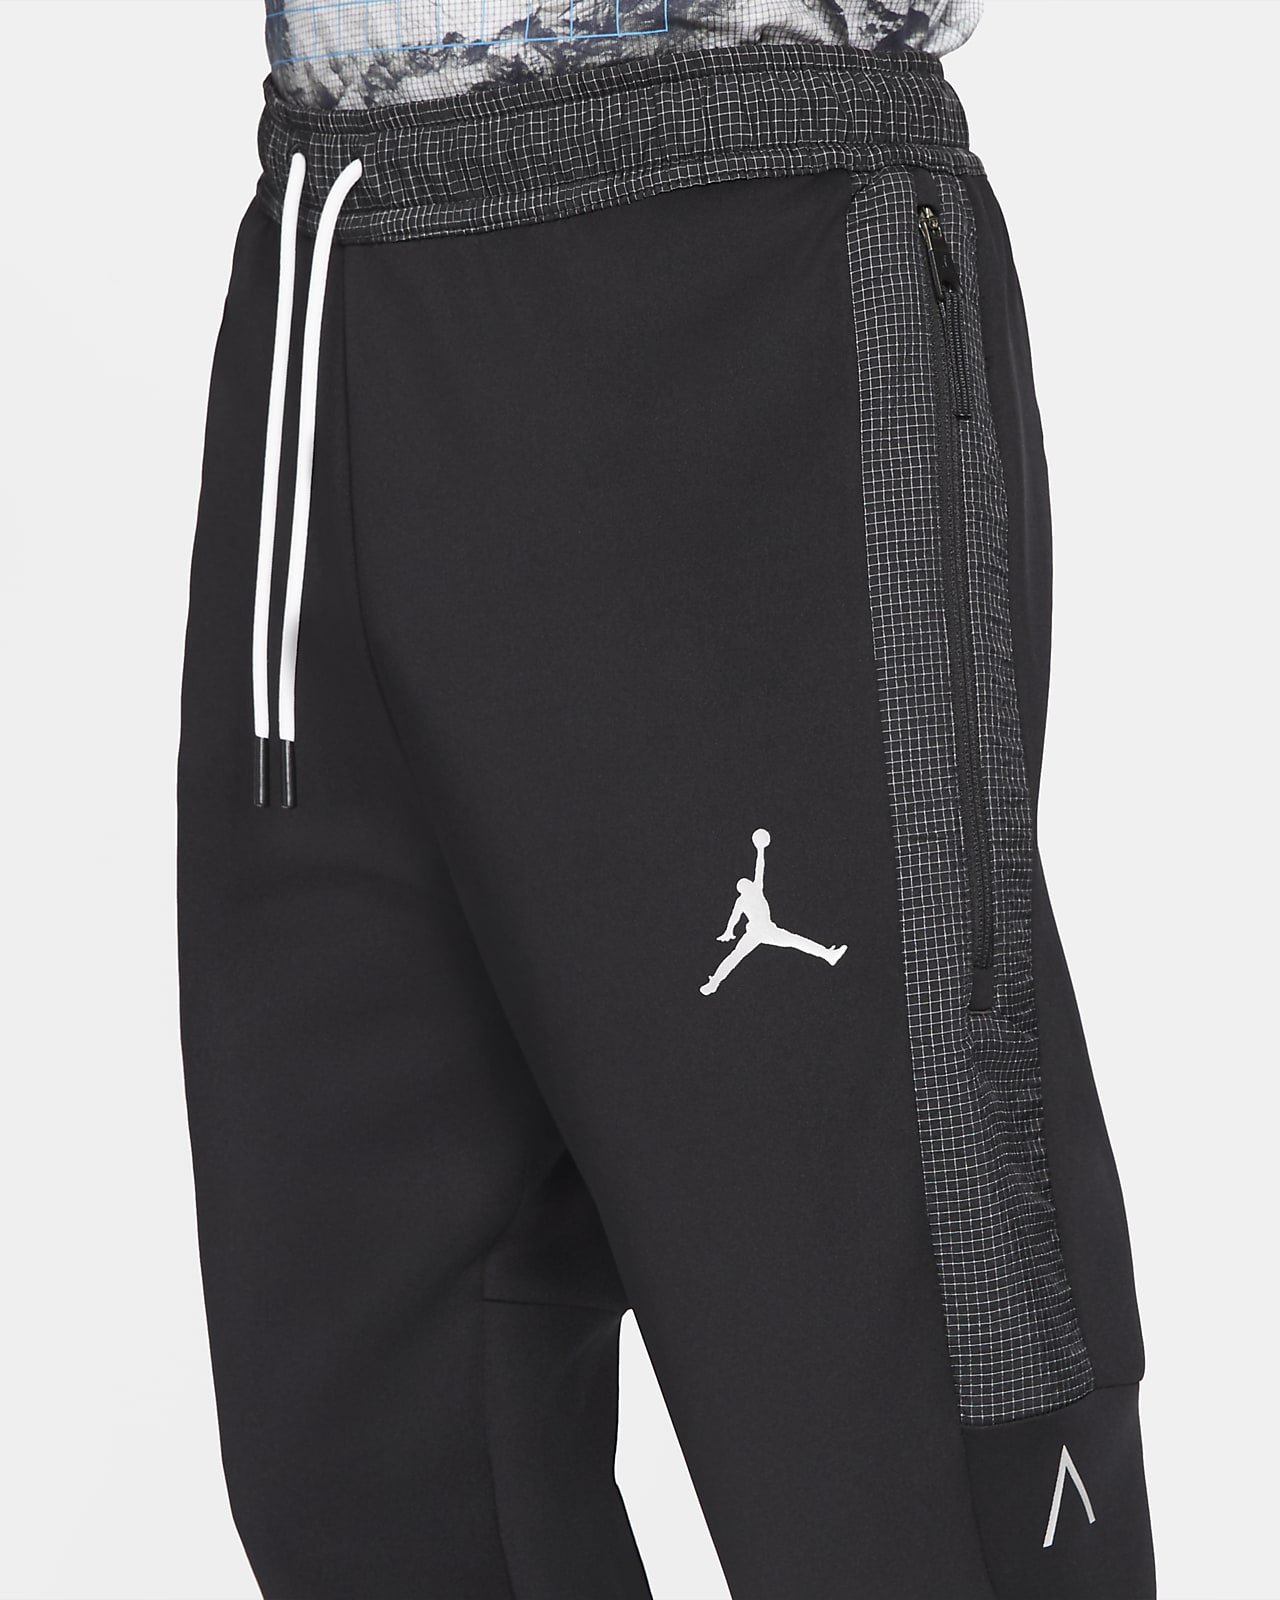 Jordan Air Men's Fleece Trousers. Nike SA